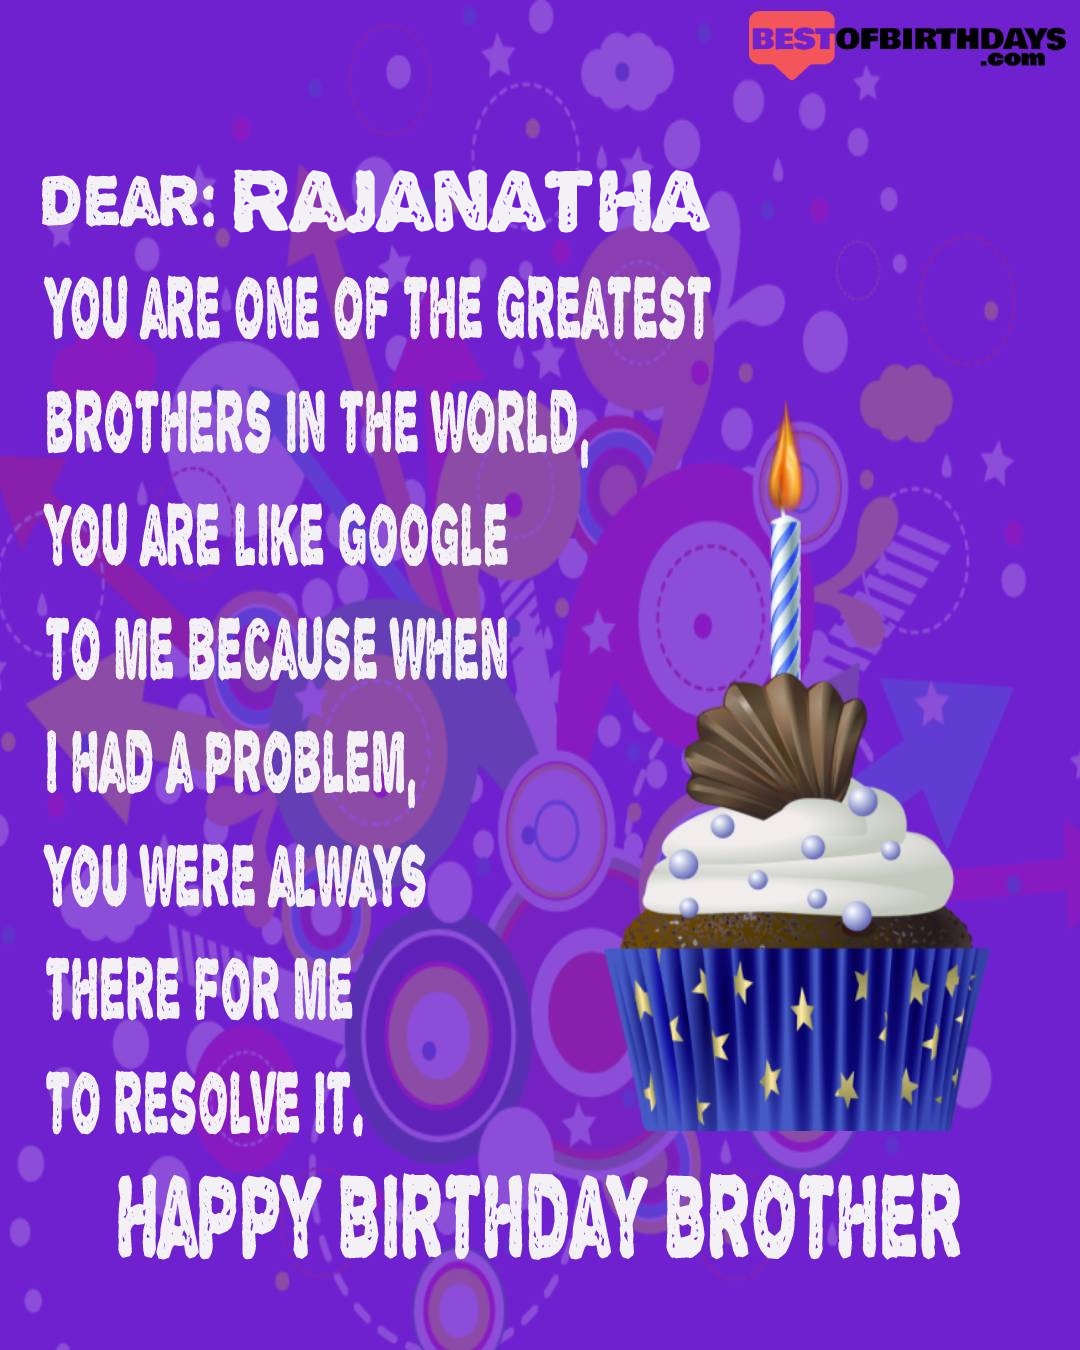 Happy birthday rajanatha bhai brother bro